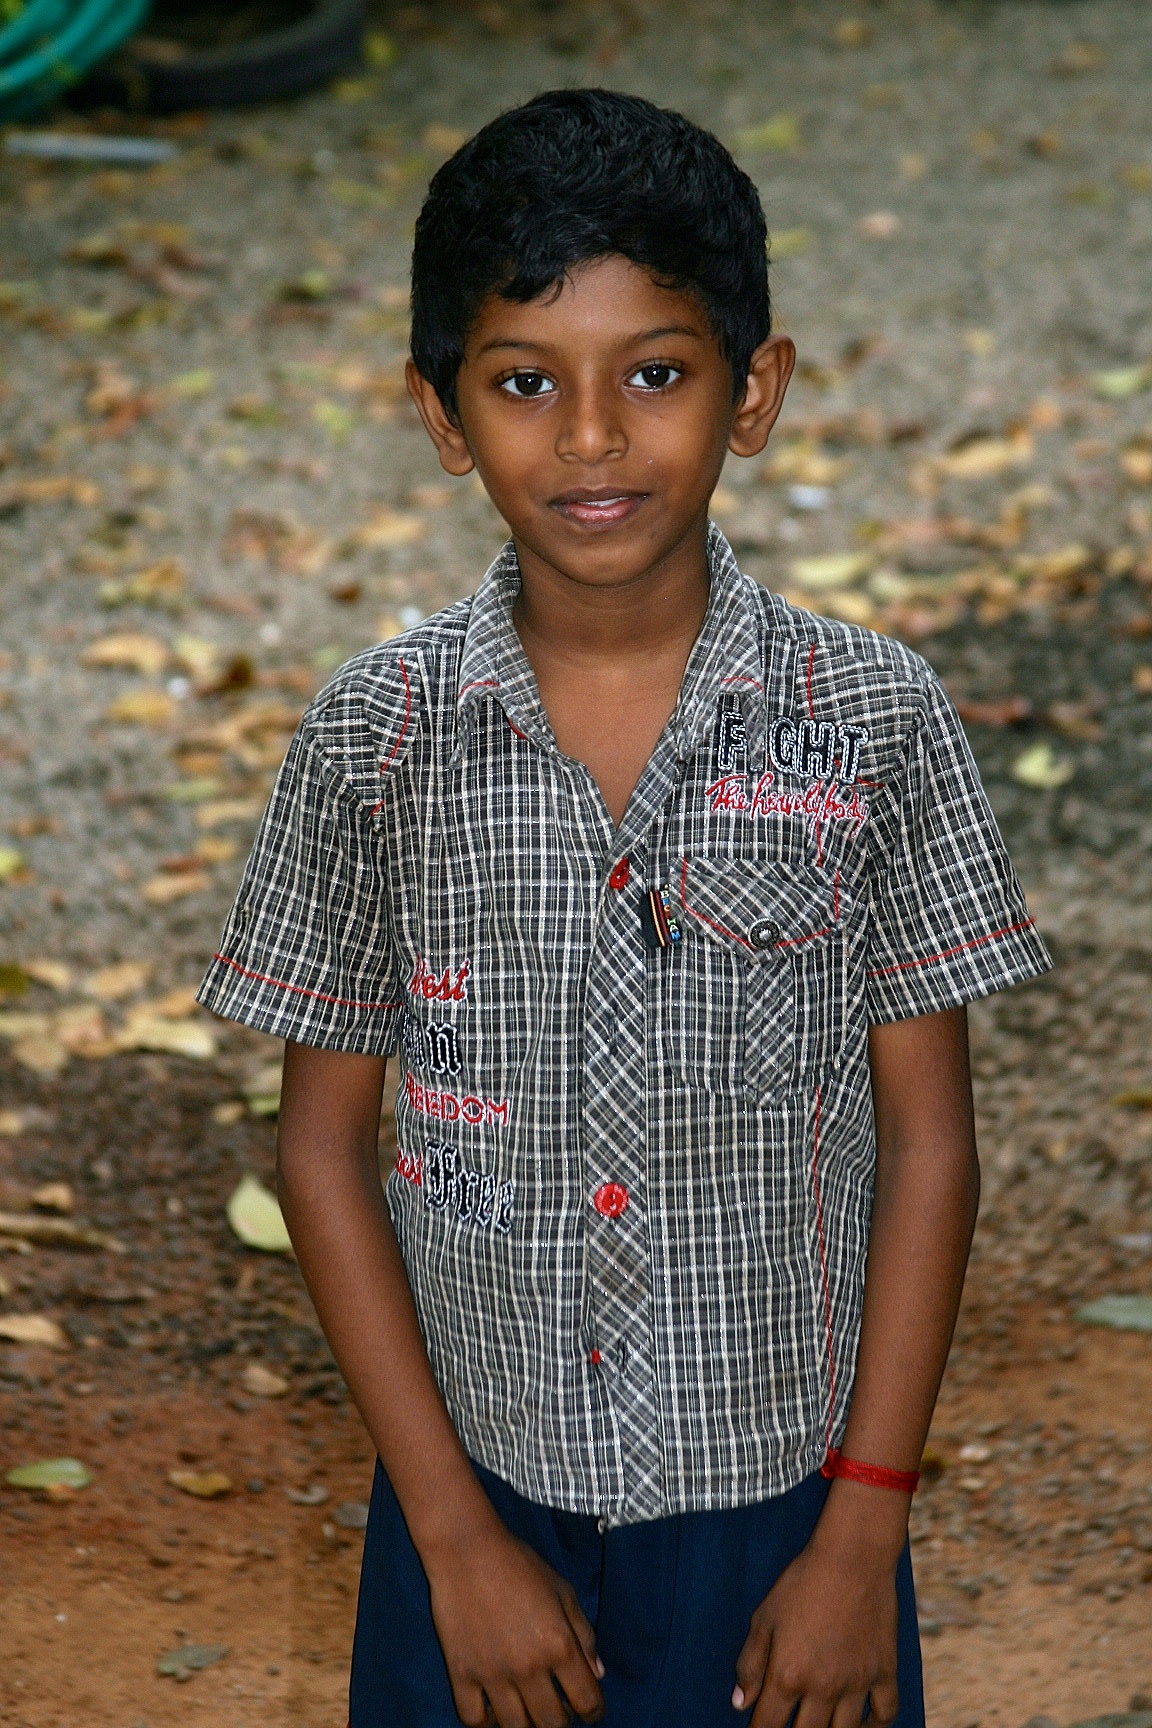 Village boy Kumarakom, Kerala, India